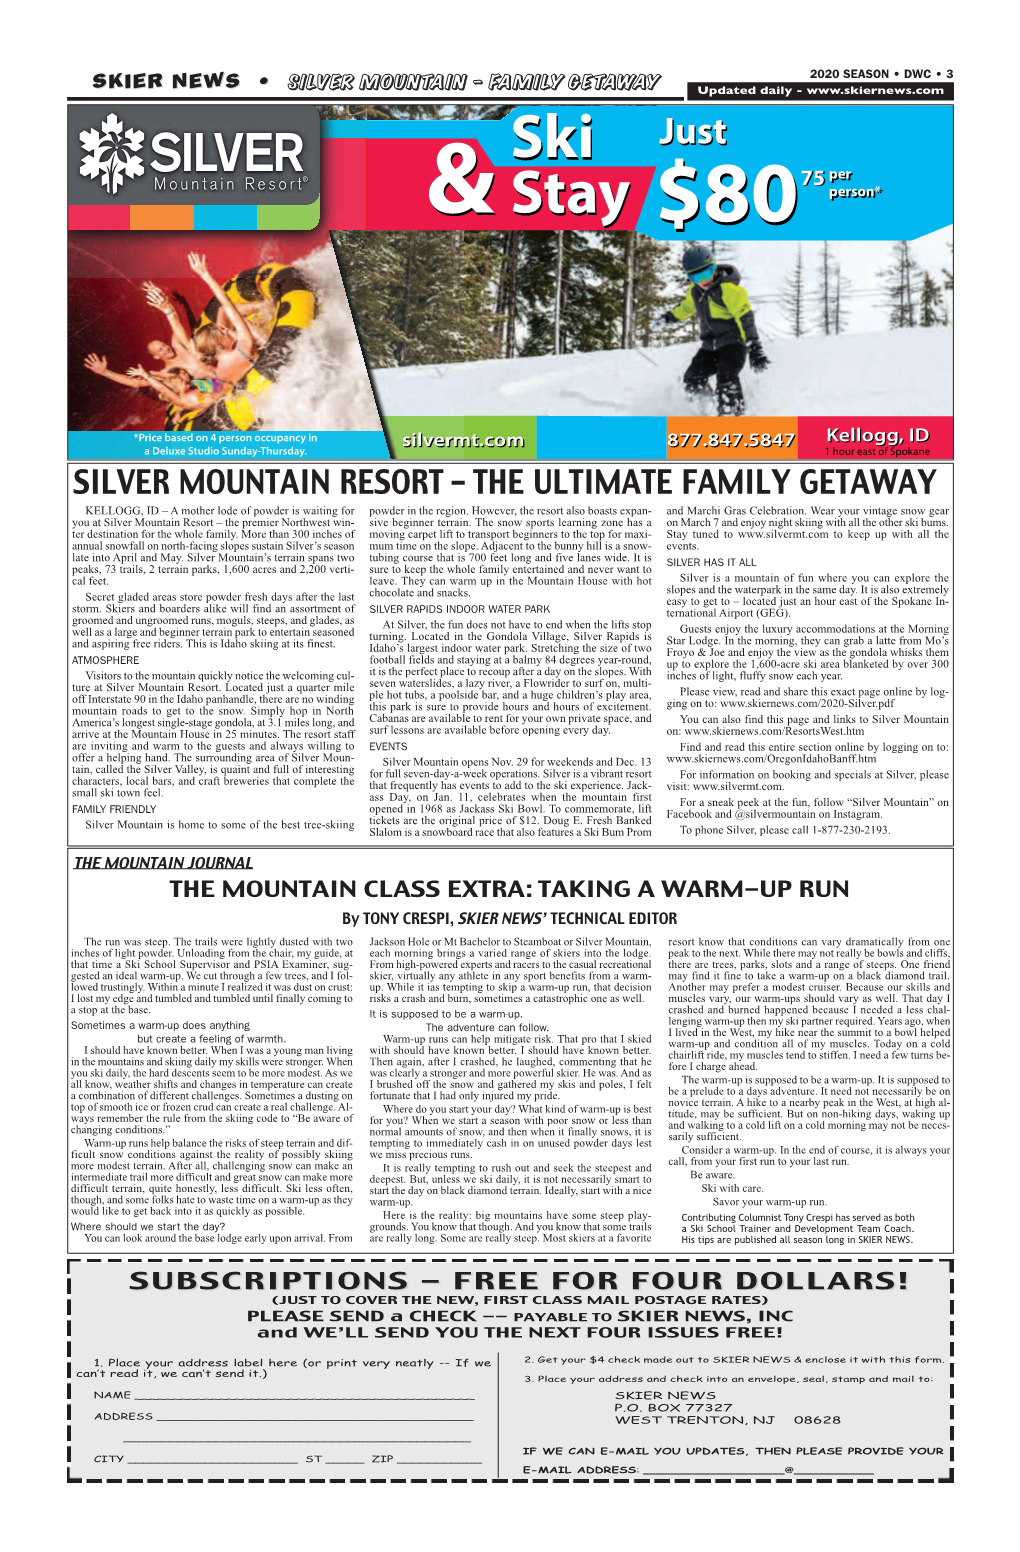 Silver Mountain Resort – the Premier Northwest Win- Sive Beginner Terrain